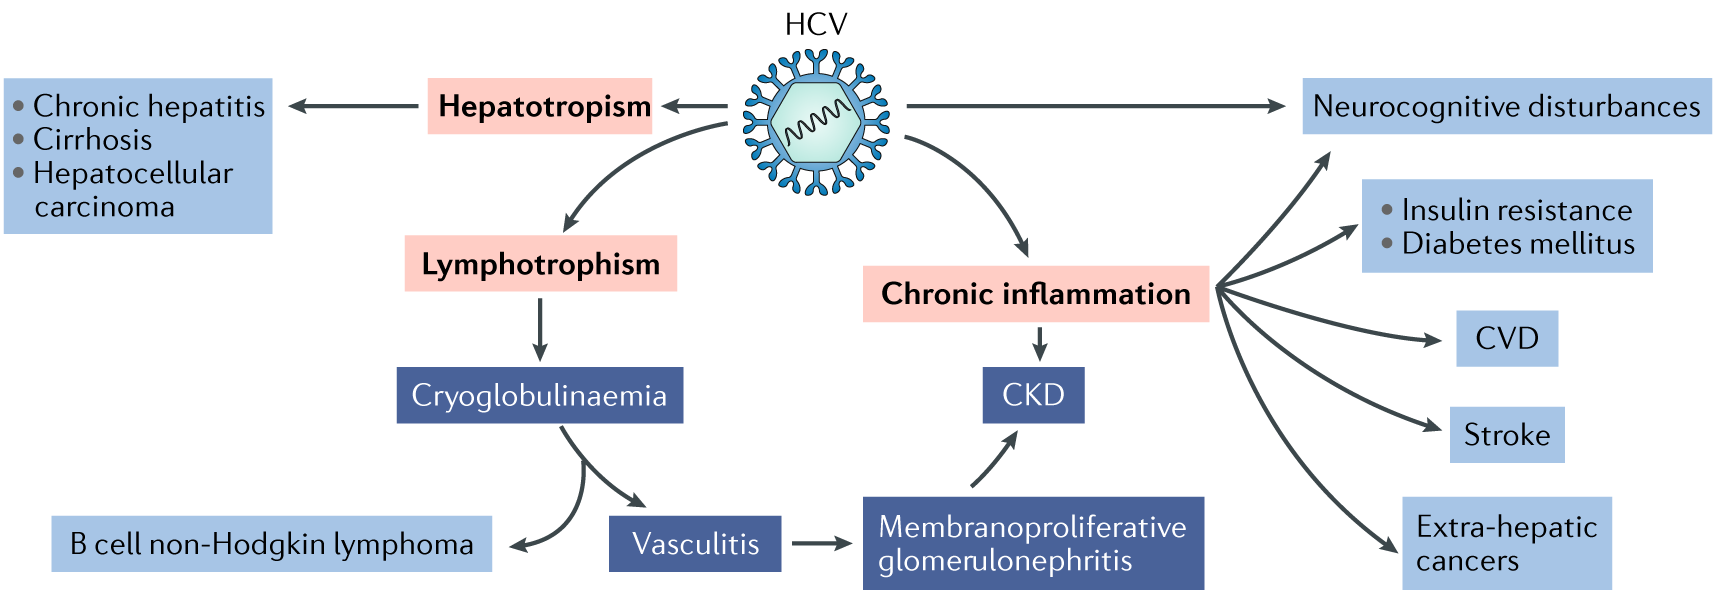 Hepatitis C Virus And The Kidney Nature Reviews Nephrology